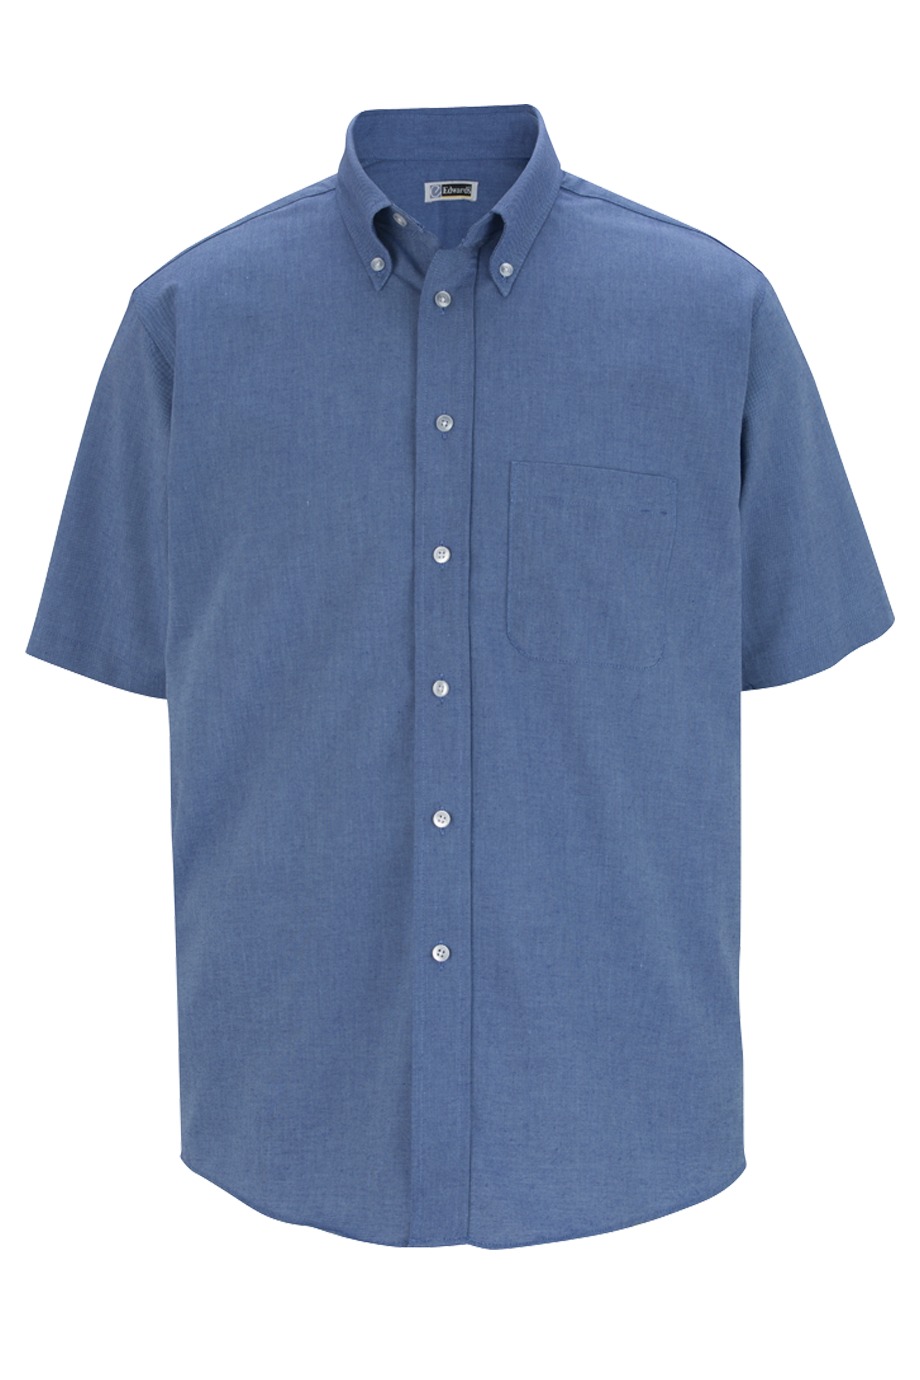 Men\'s SS Dress Shirt, French Blue